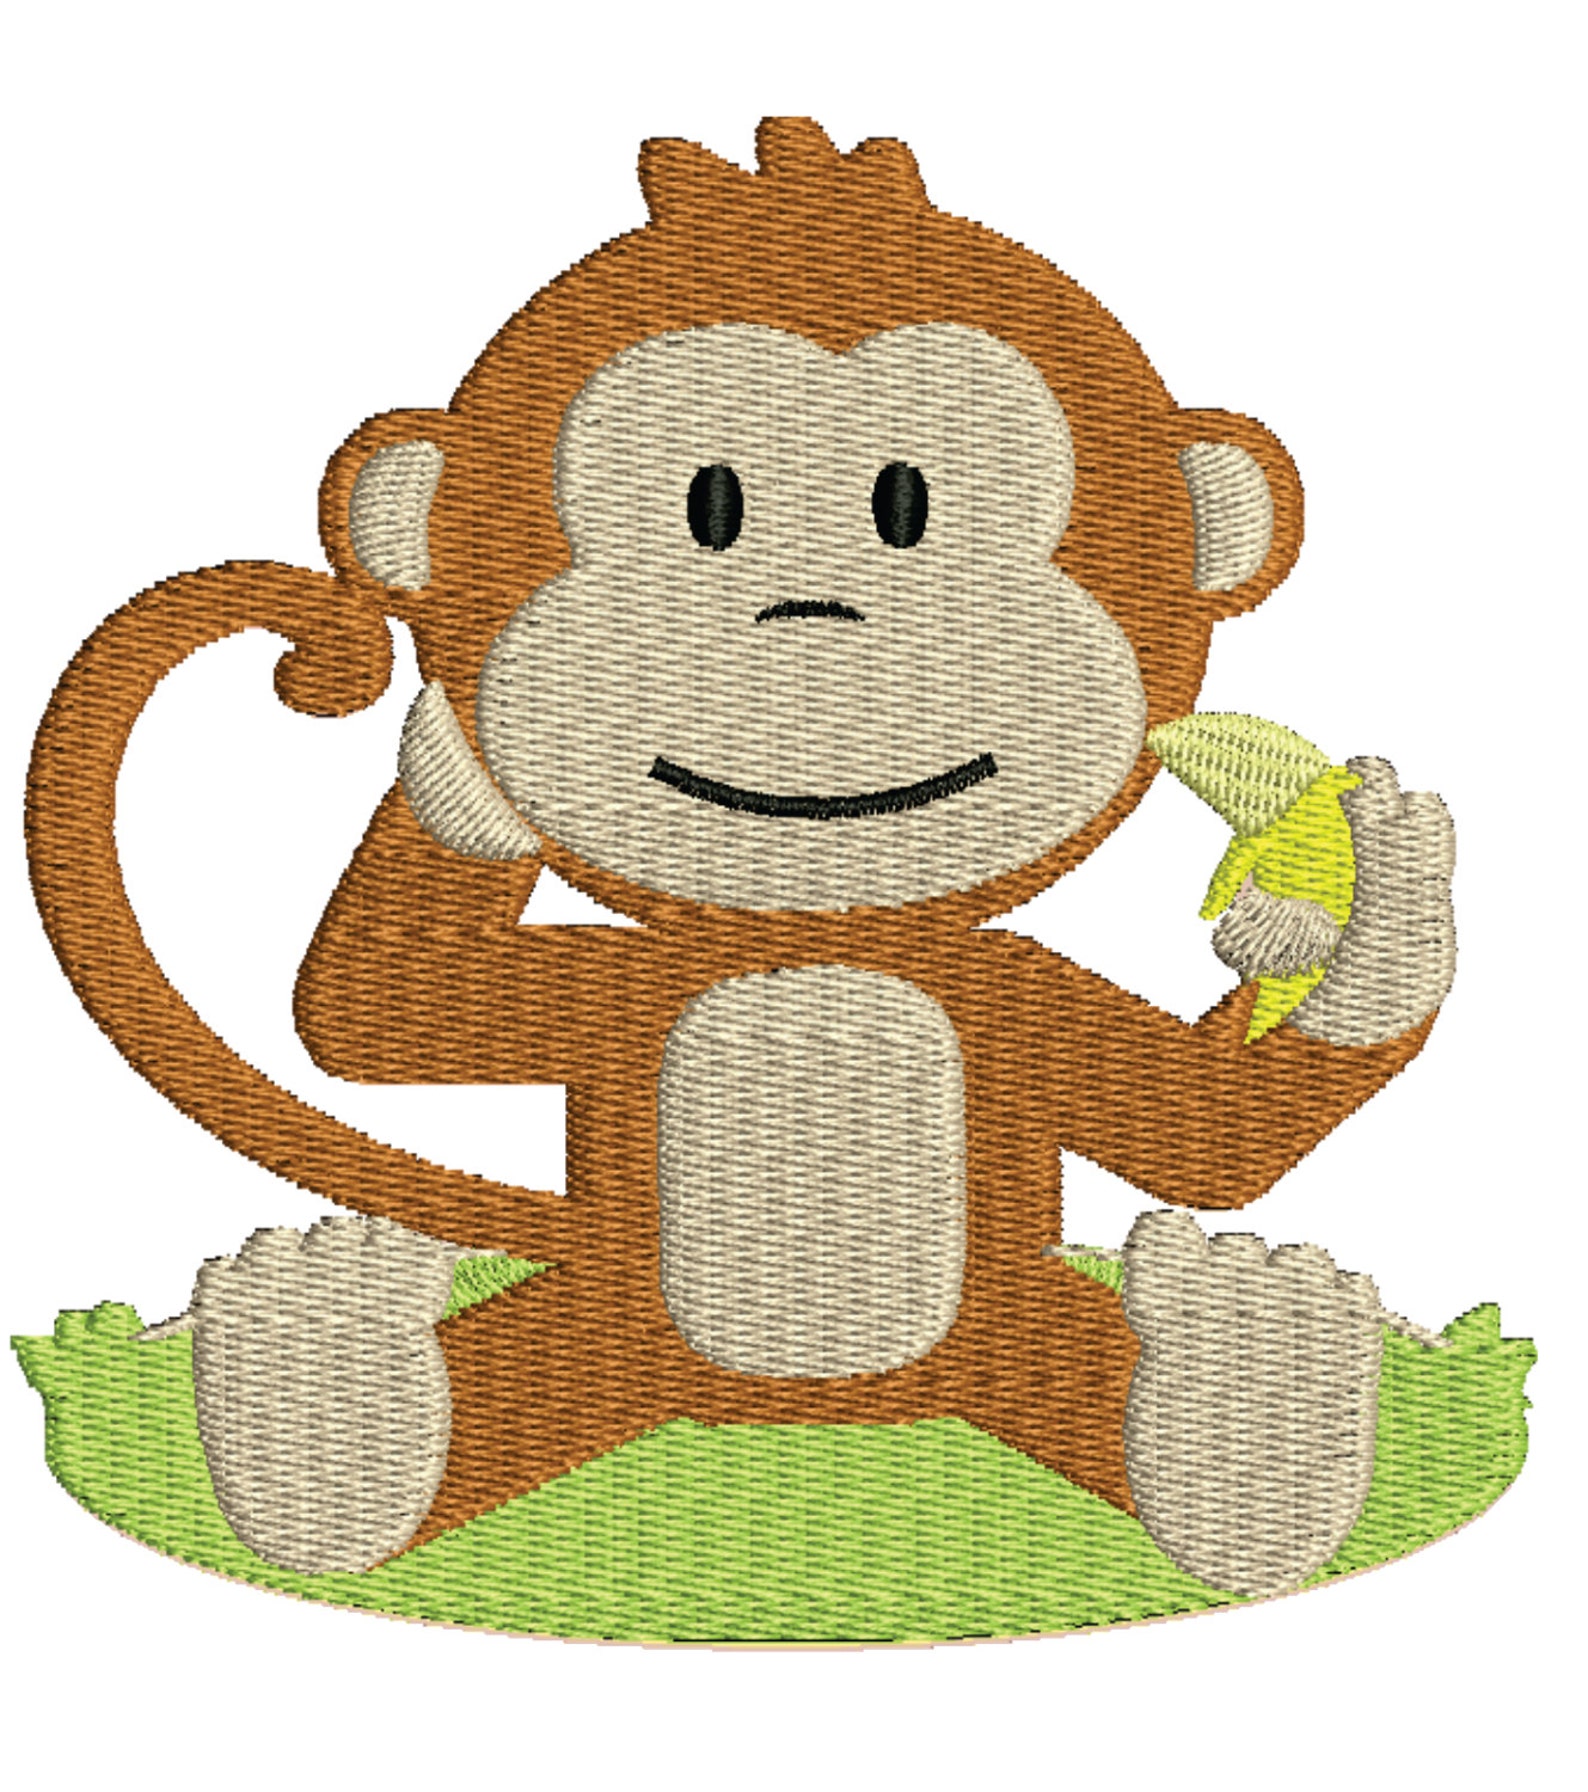 Monkey machine. Вышивка обезьяна. Машинкака обезьянка своими руками. Машинная вышивка.